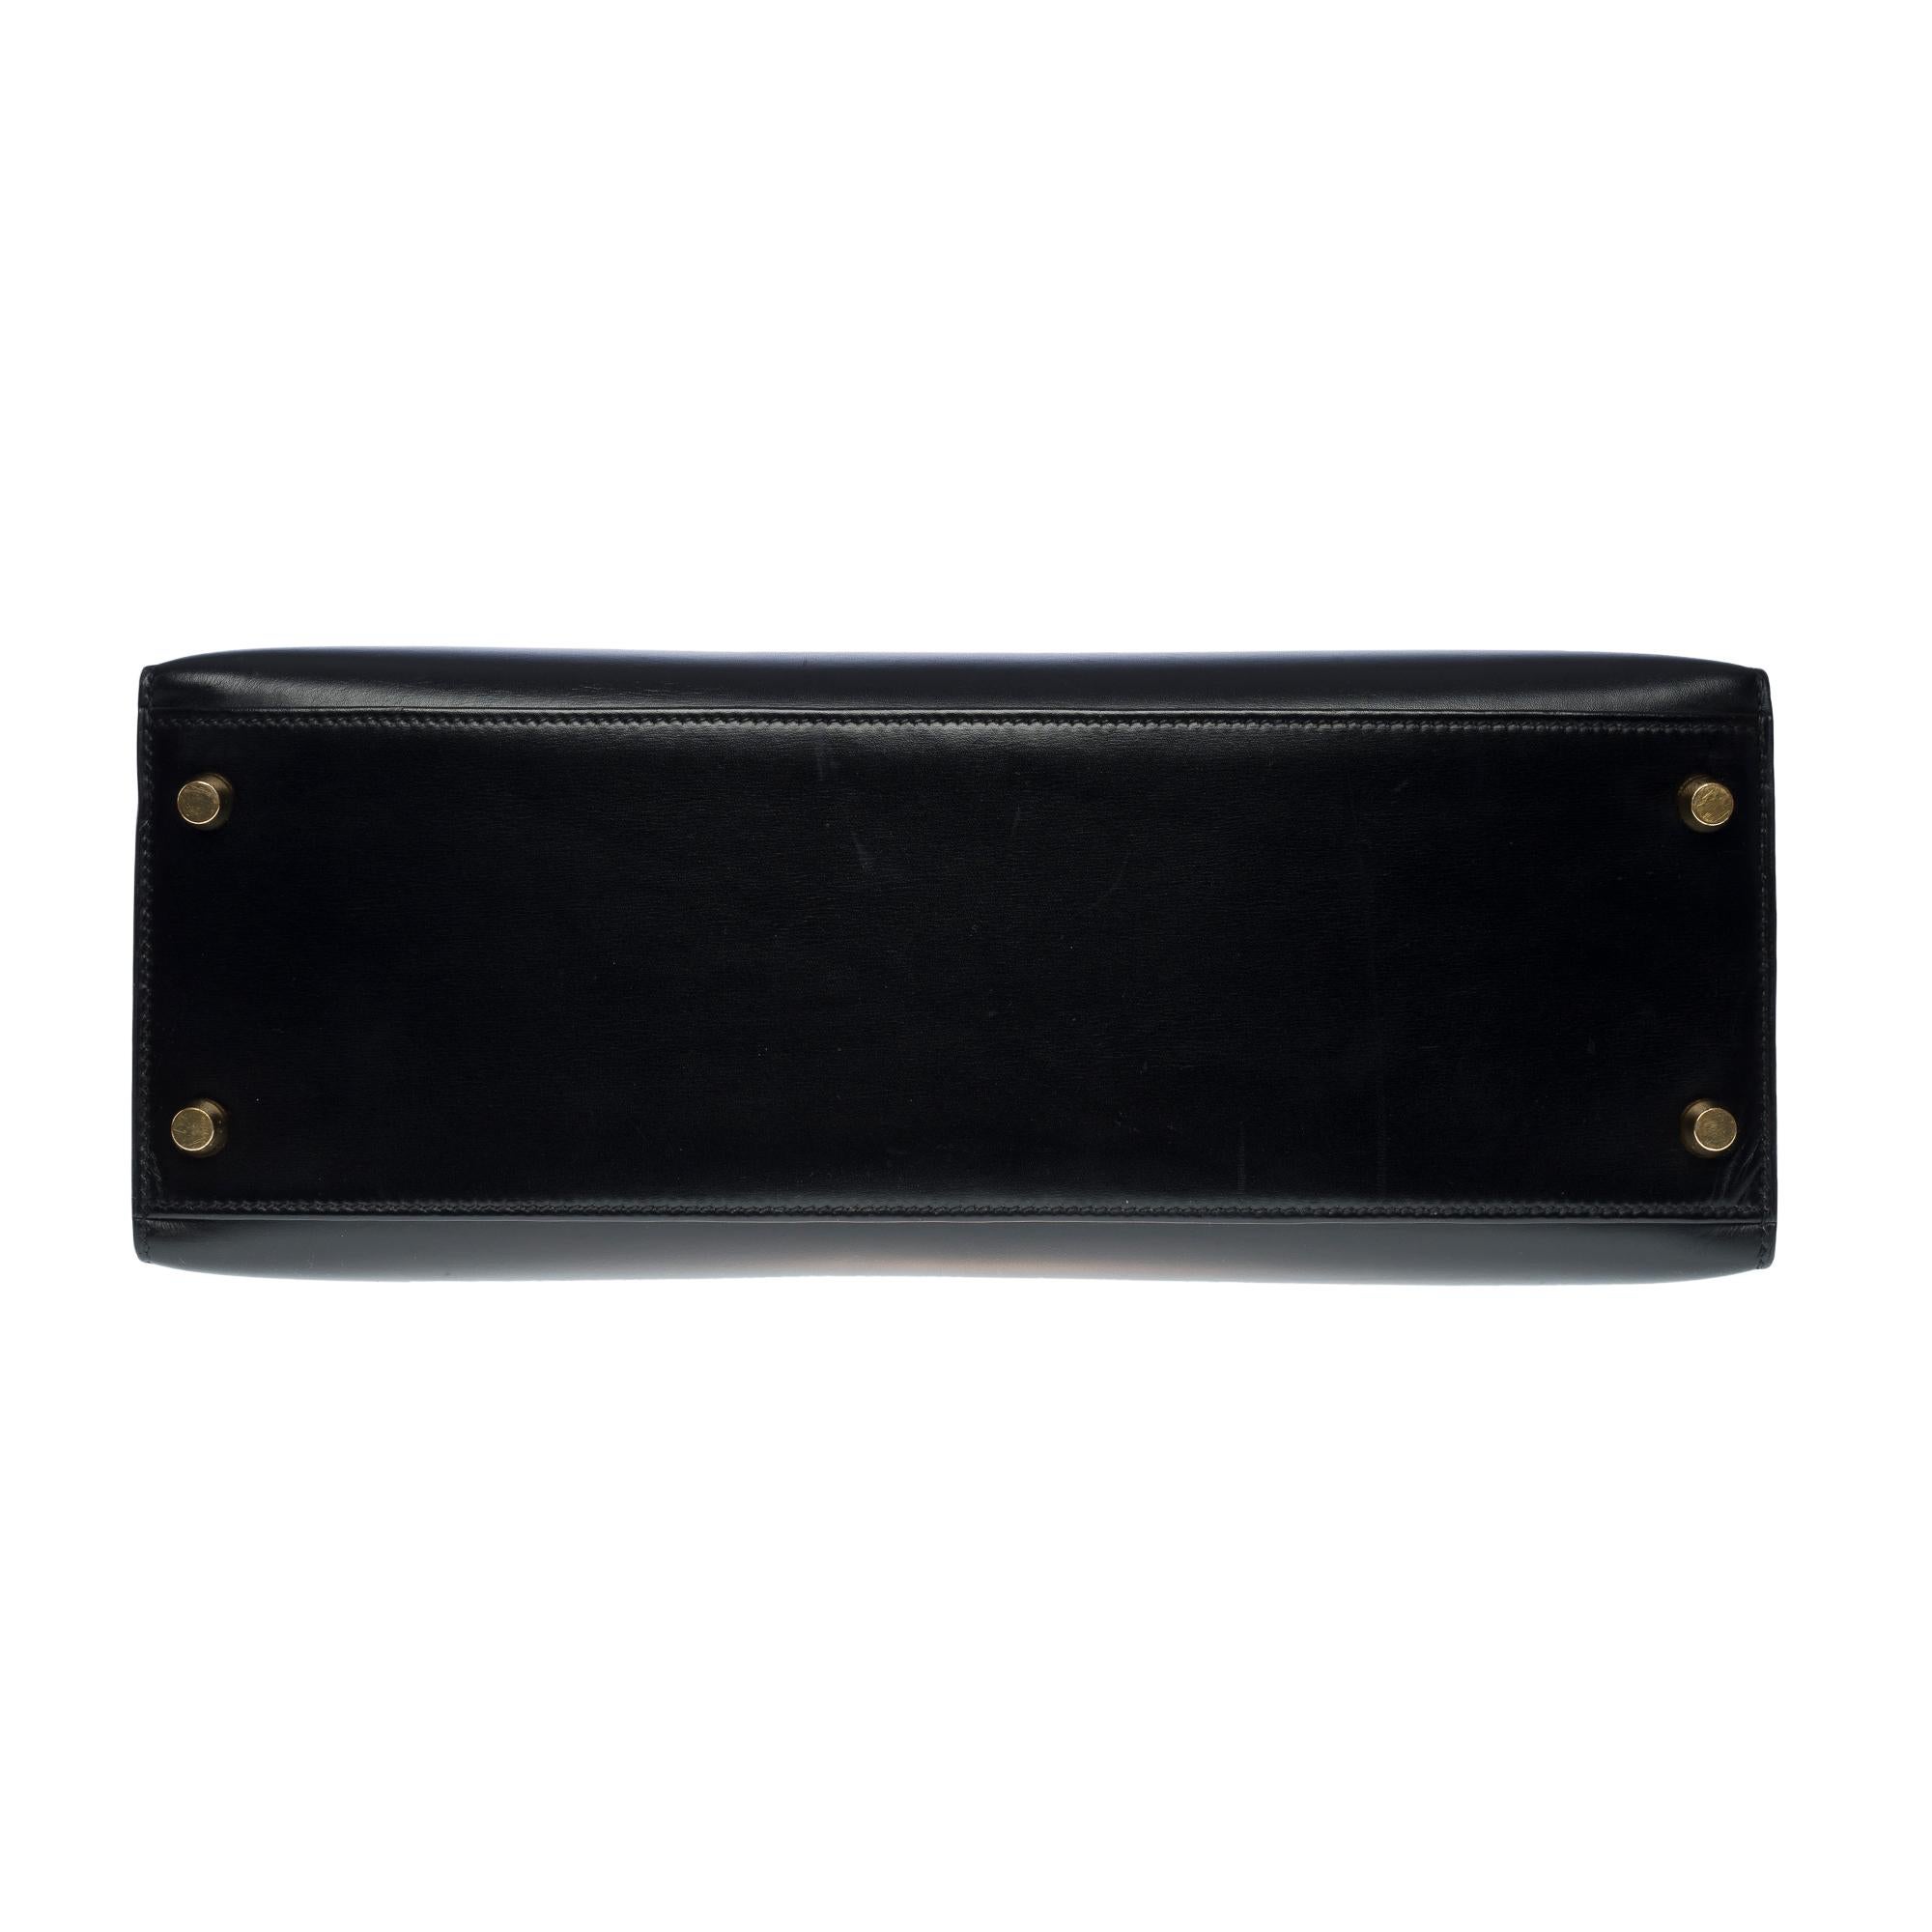 Gorgeous Hermès Kelly 32 sellier handbag strap in black box calf leather, GHW For Sale 5